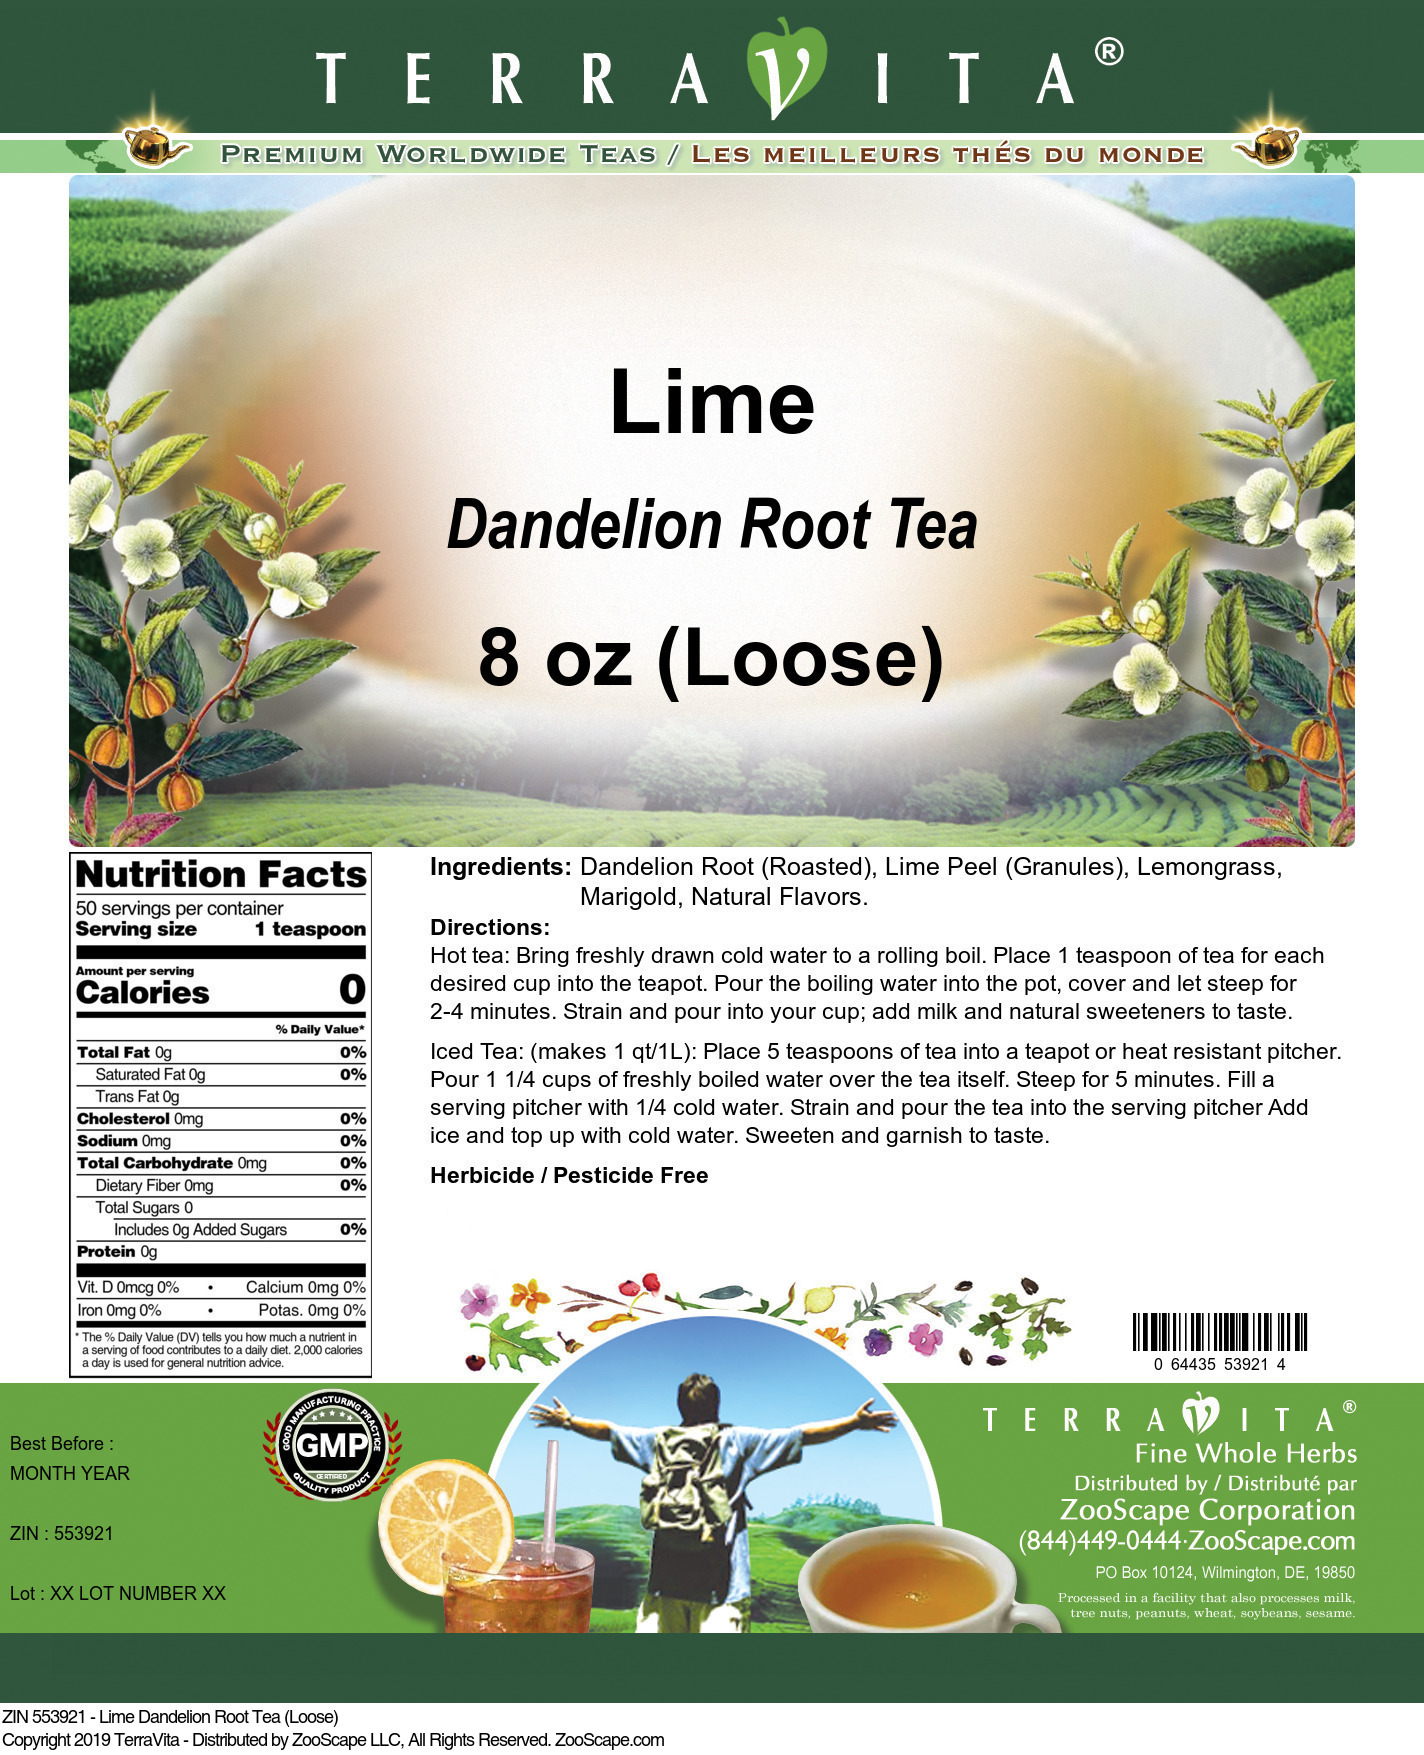 Lime Dandelion Root Tea (Loose) - Label